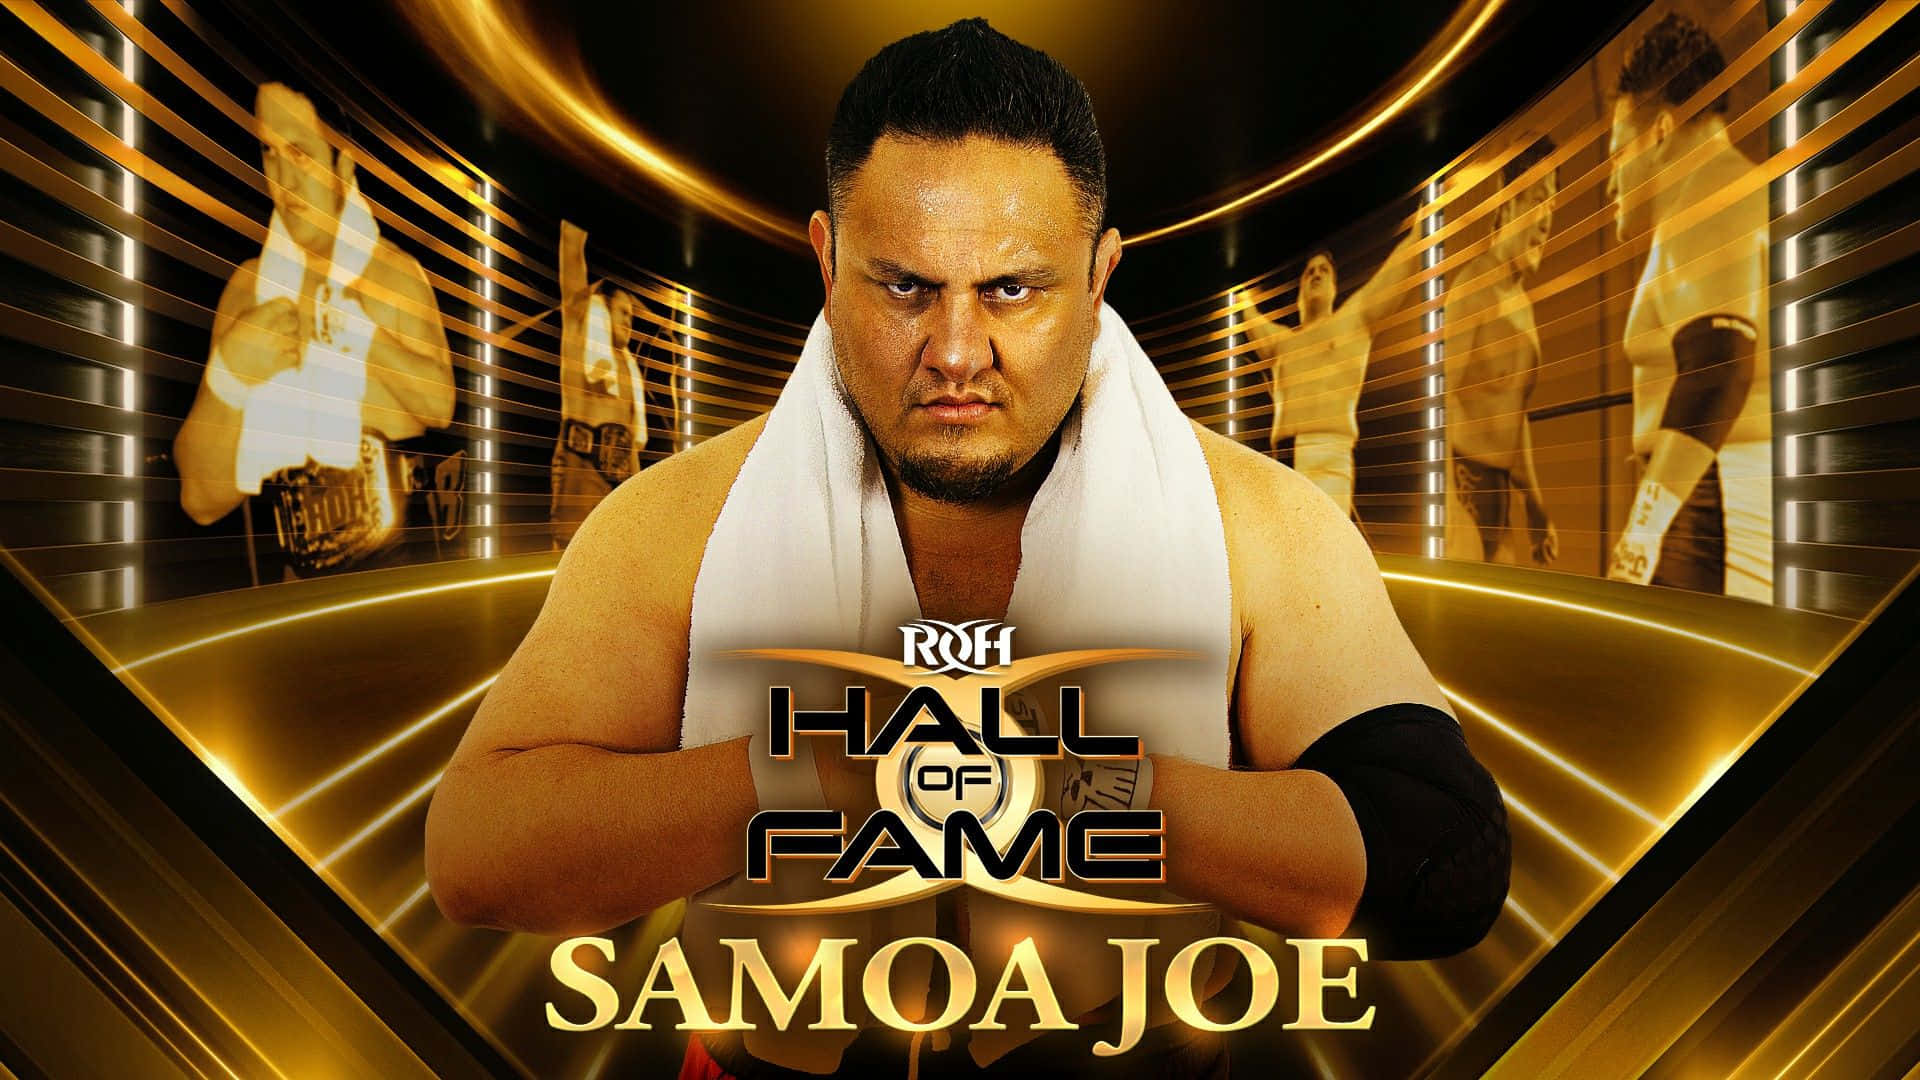 Samoa Joe Ring Of Honor Hall Of Fame Wallpaper